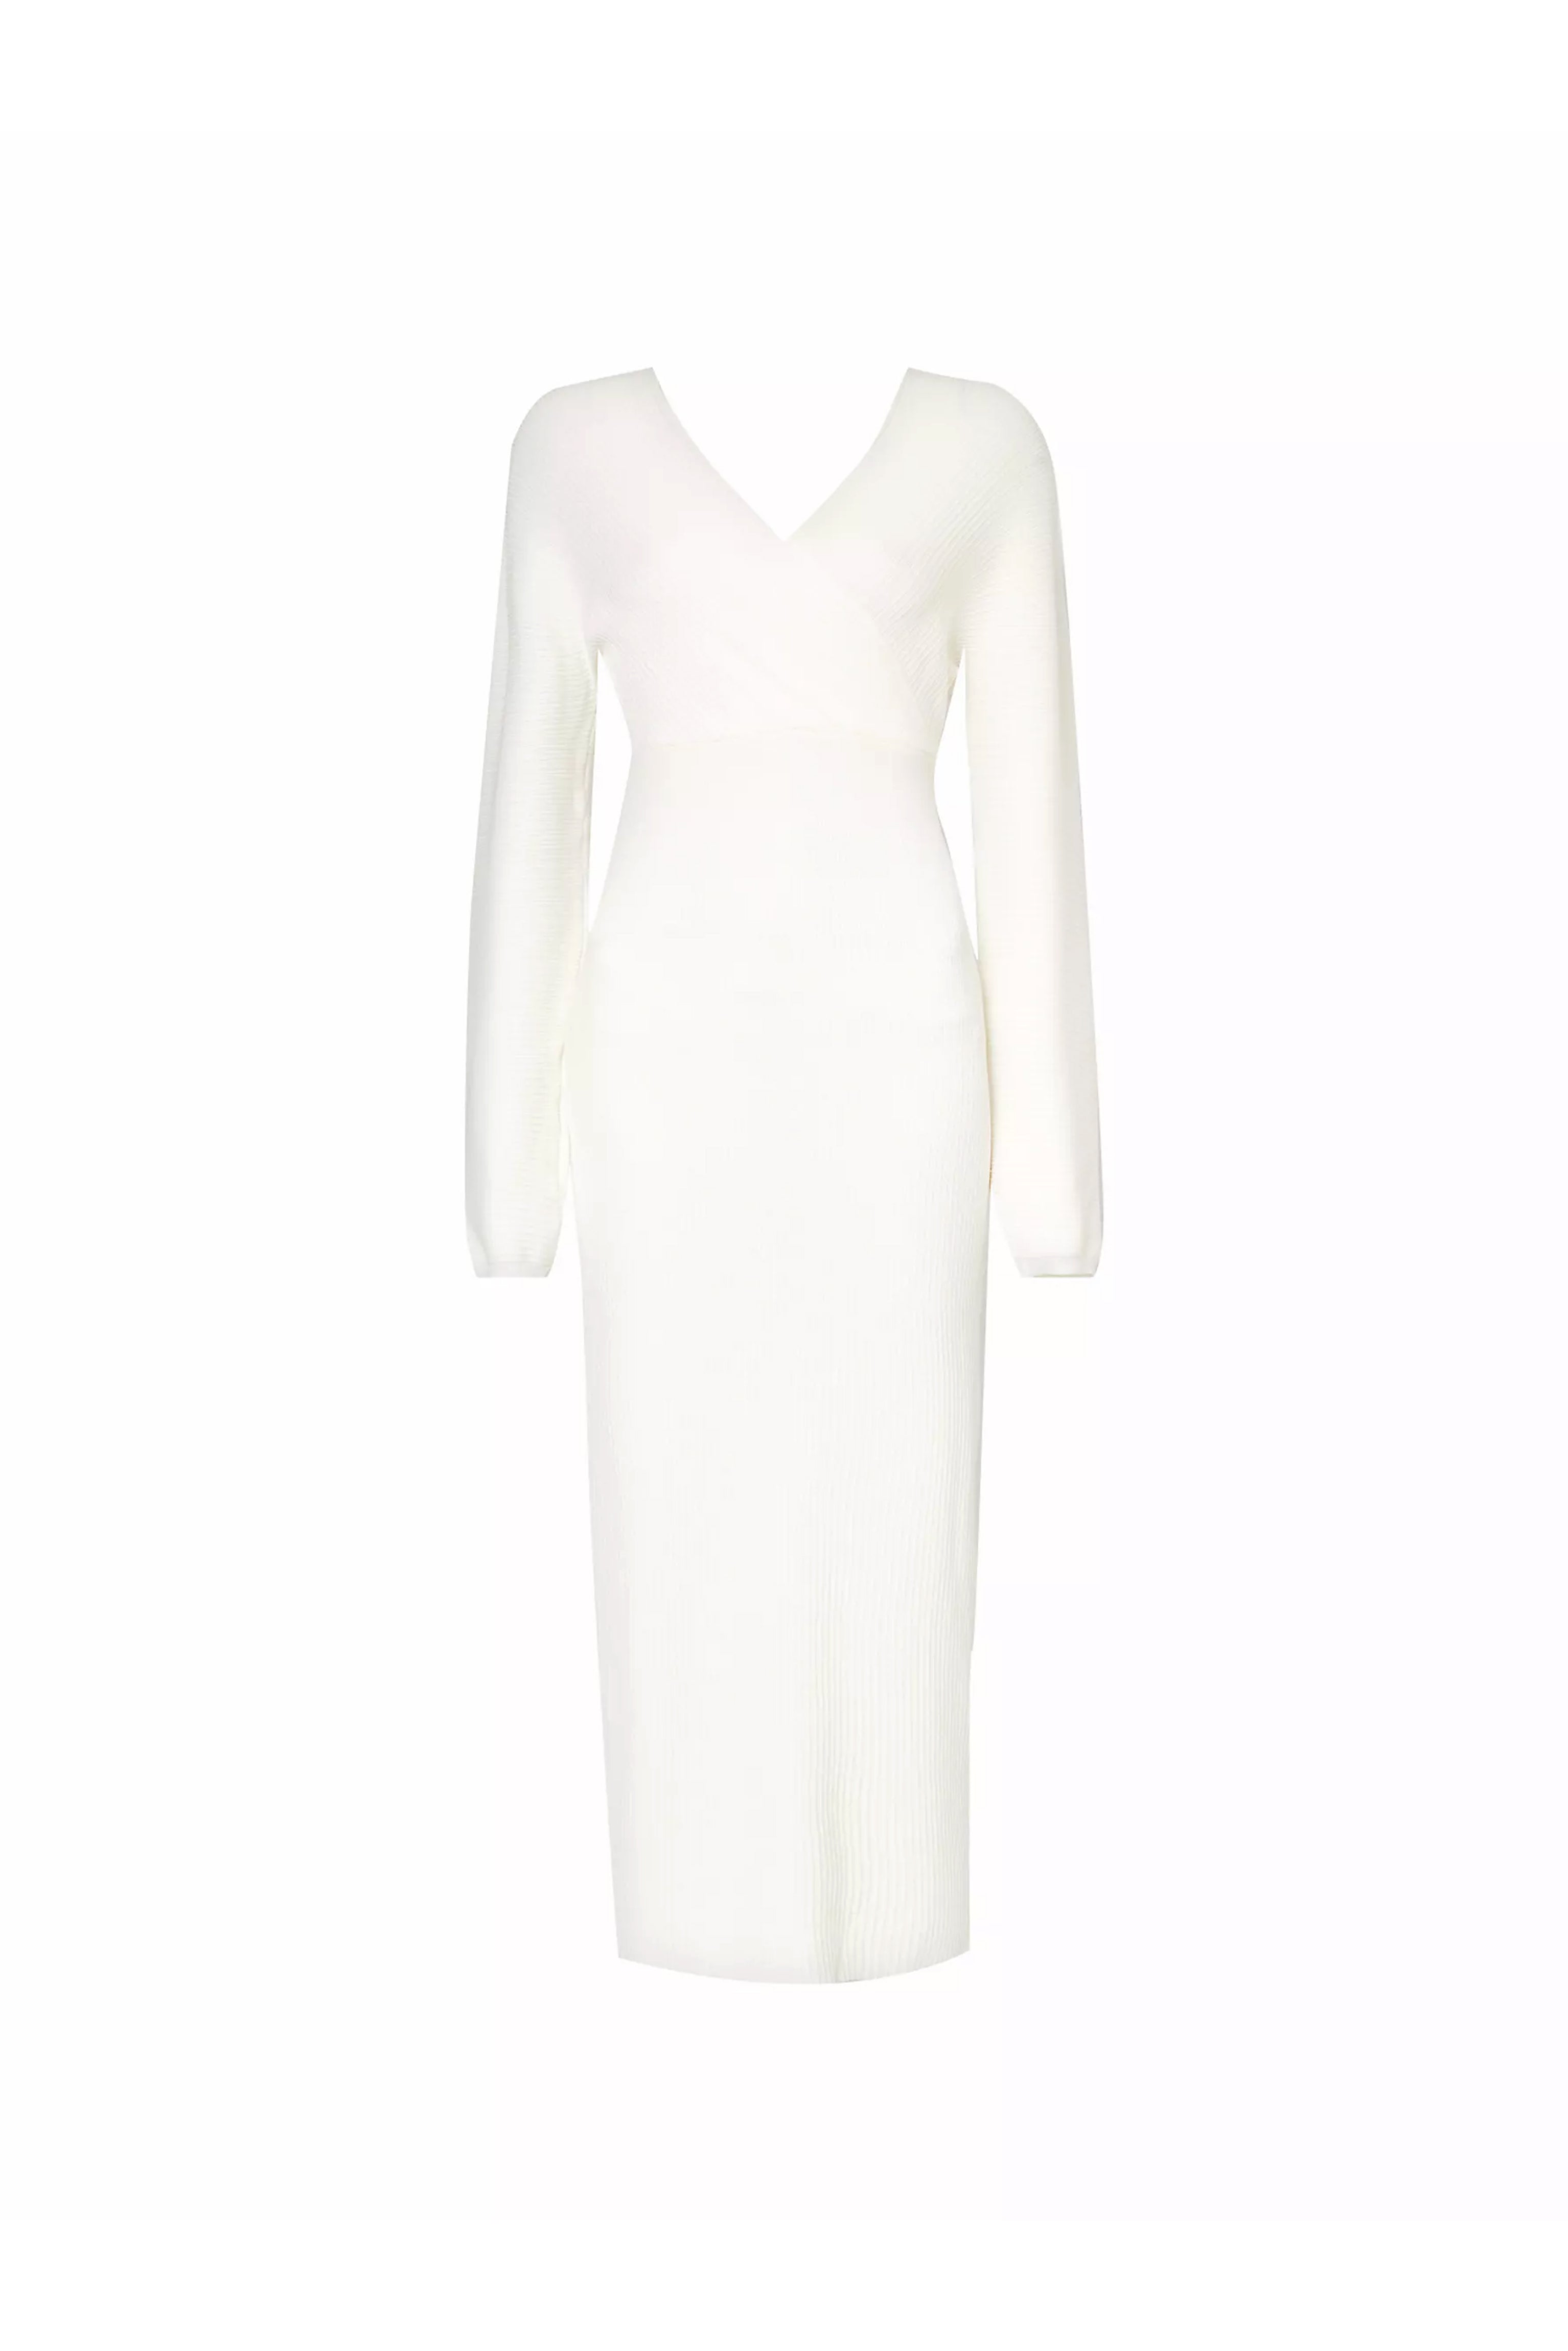 Adelaide White Wrap Rib Knit Midi Dress